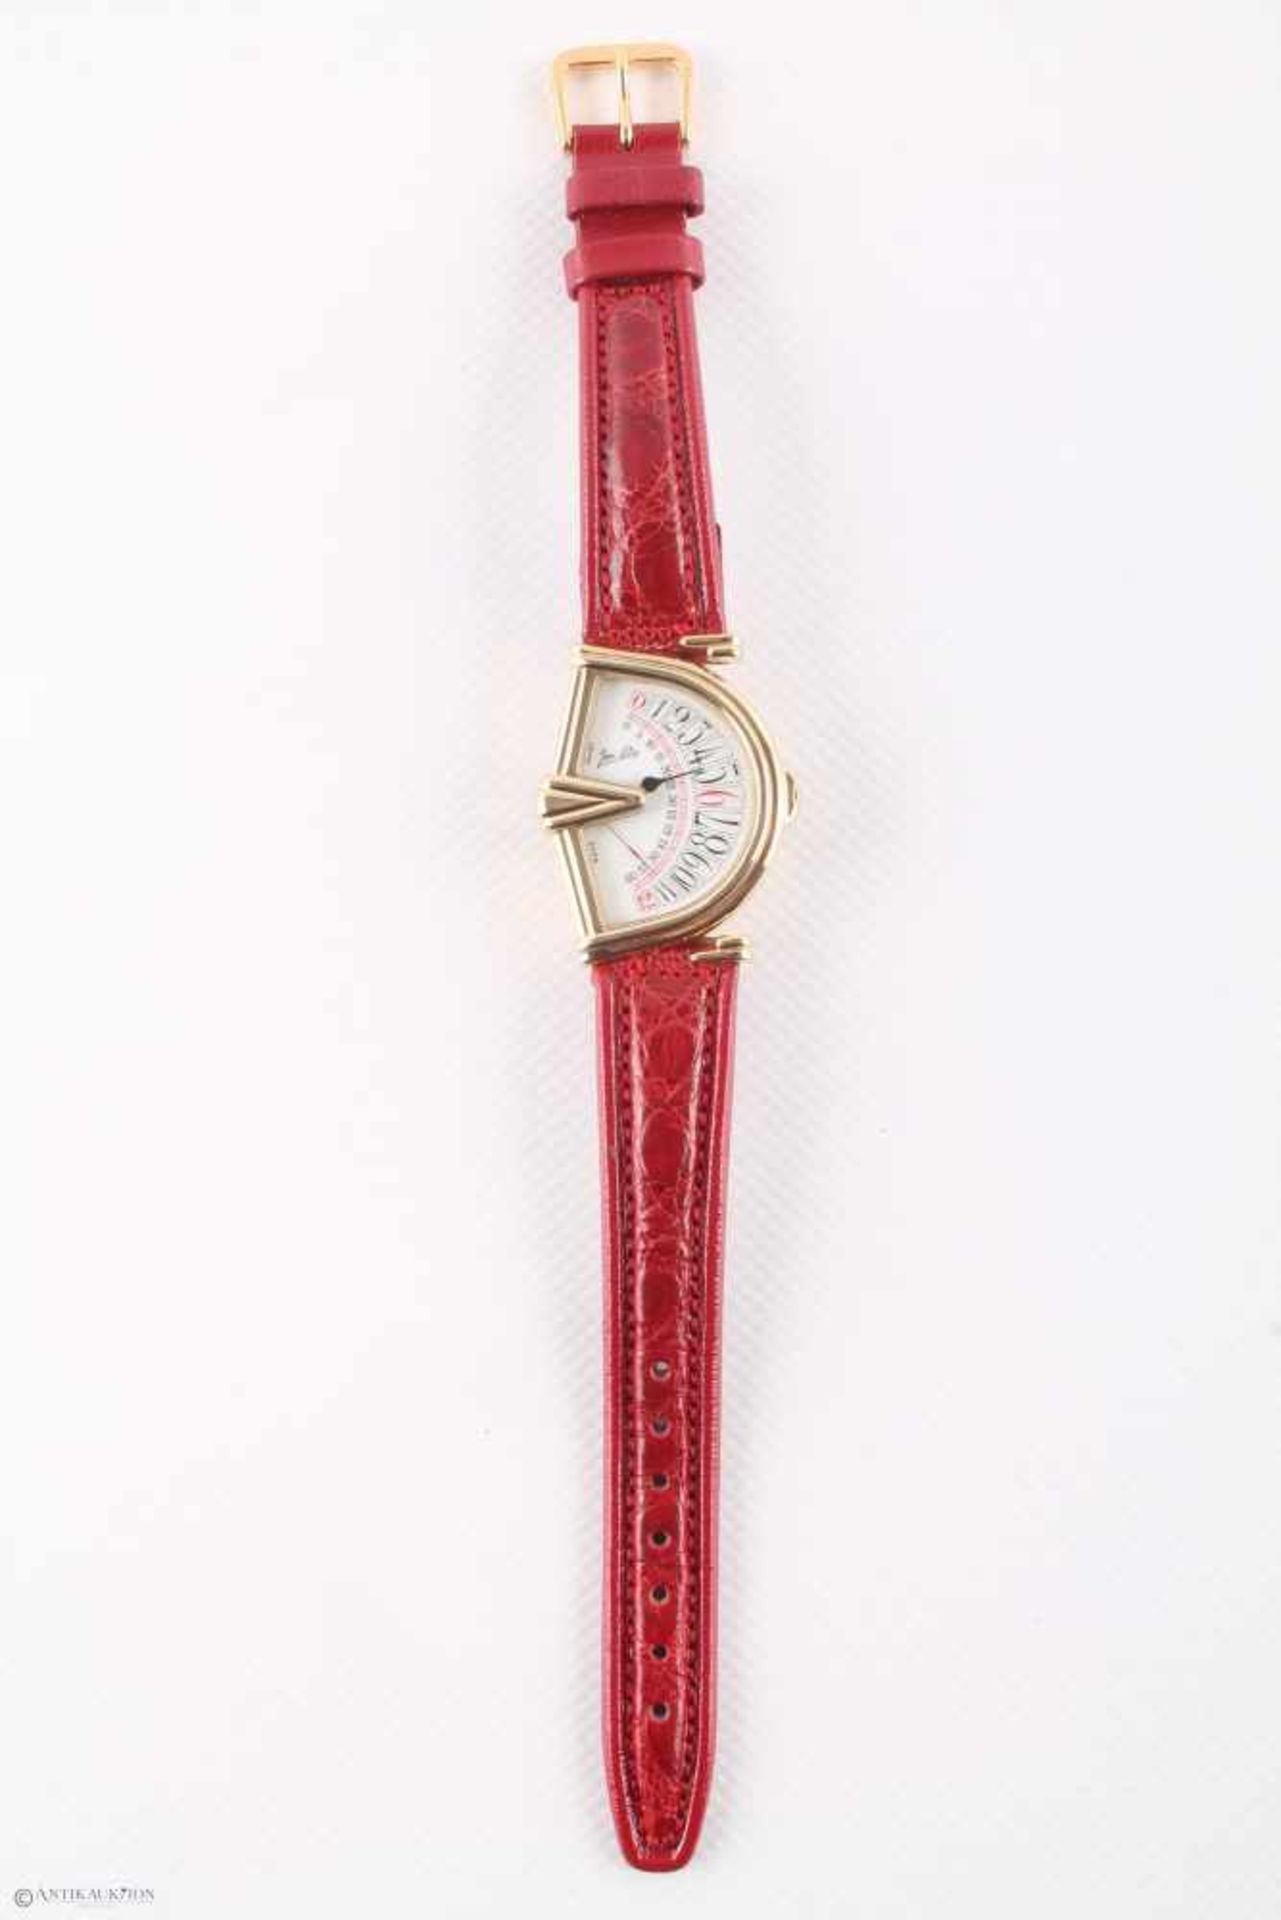 Jean d'Eve Sectora Armbanduhr, wristwatch, - Image 5 of 8